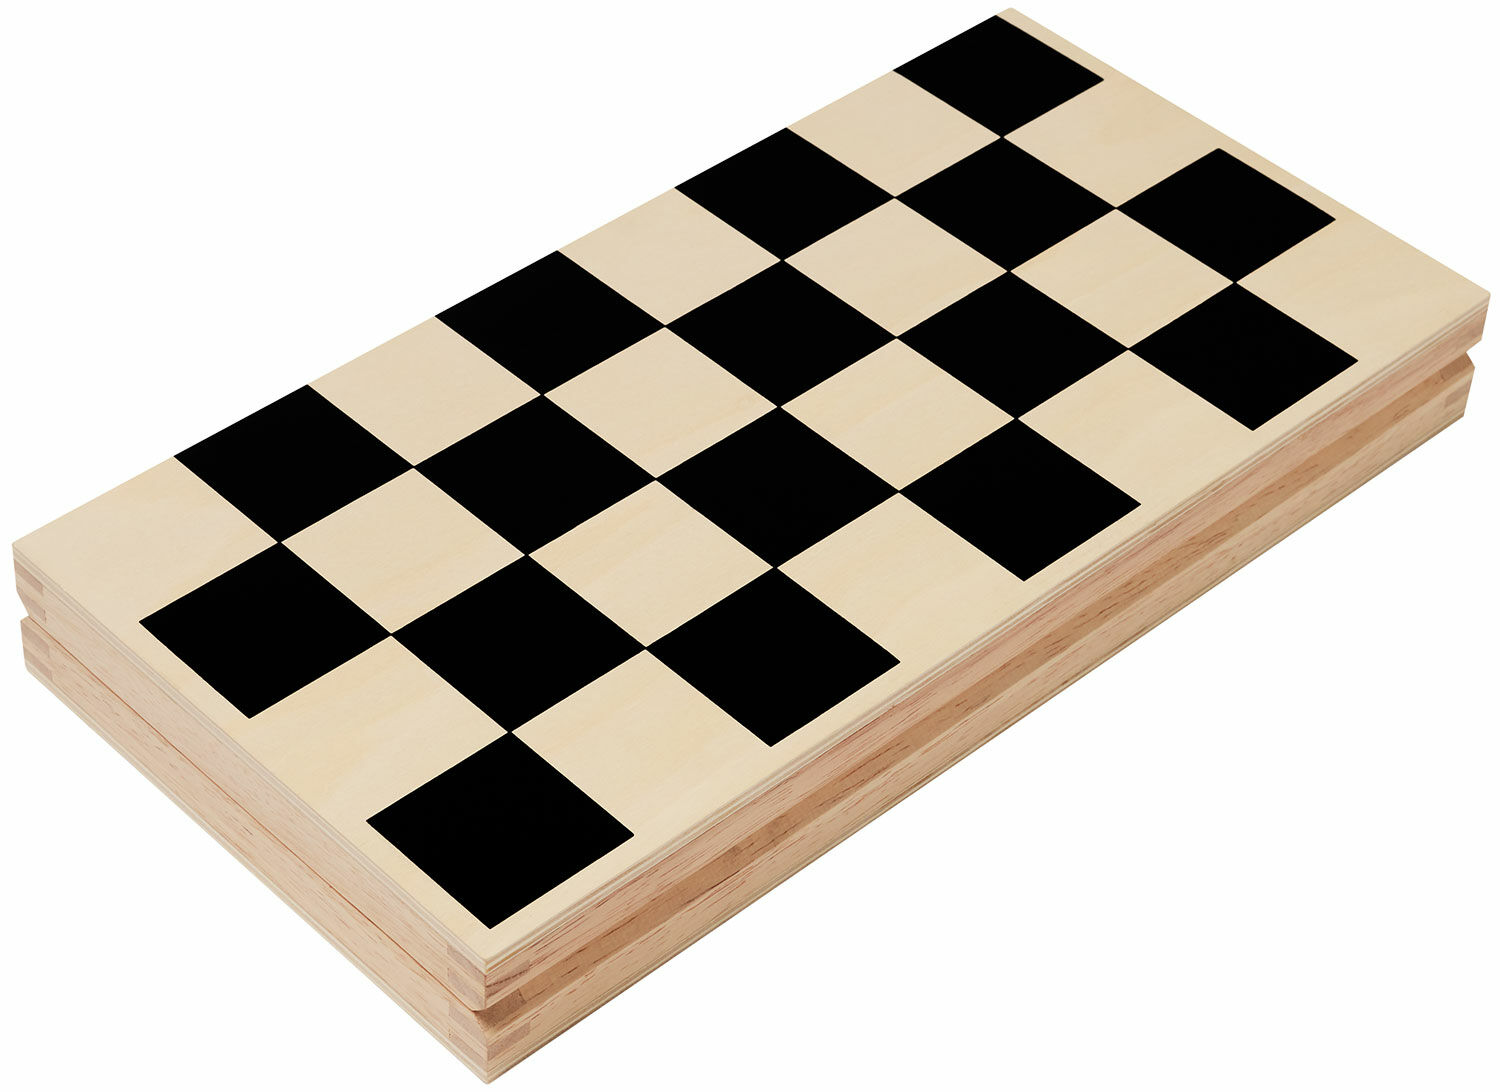 Schachspiel "Panisa Chess Set"